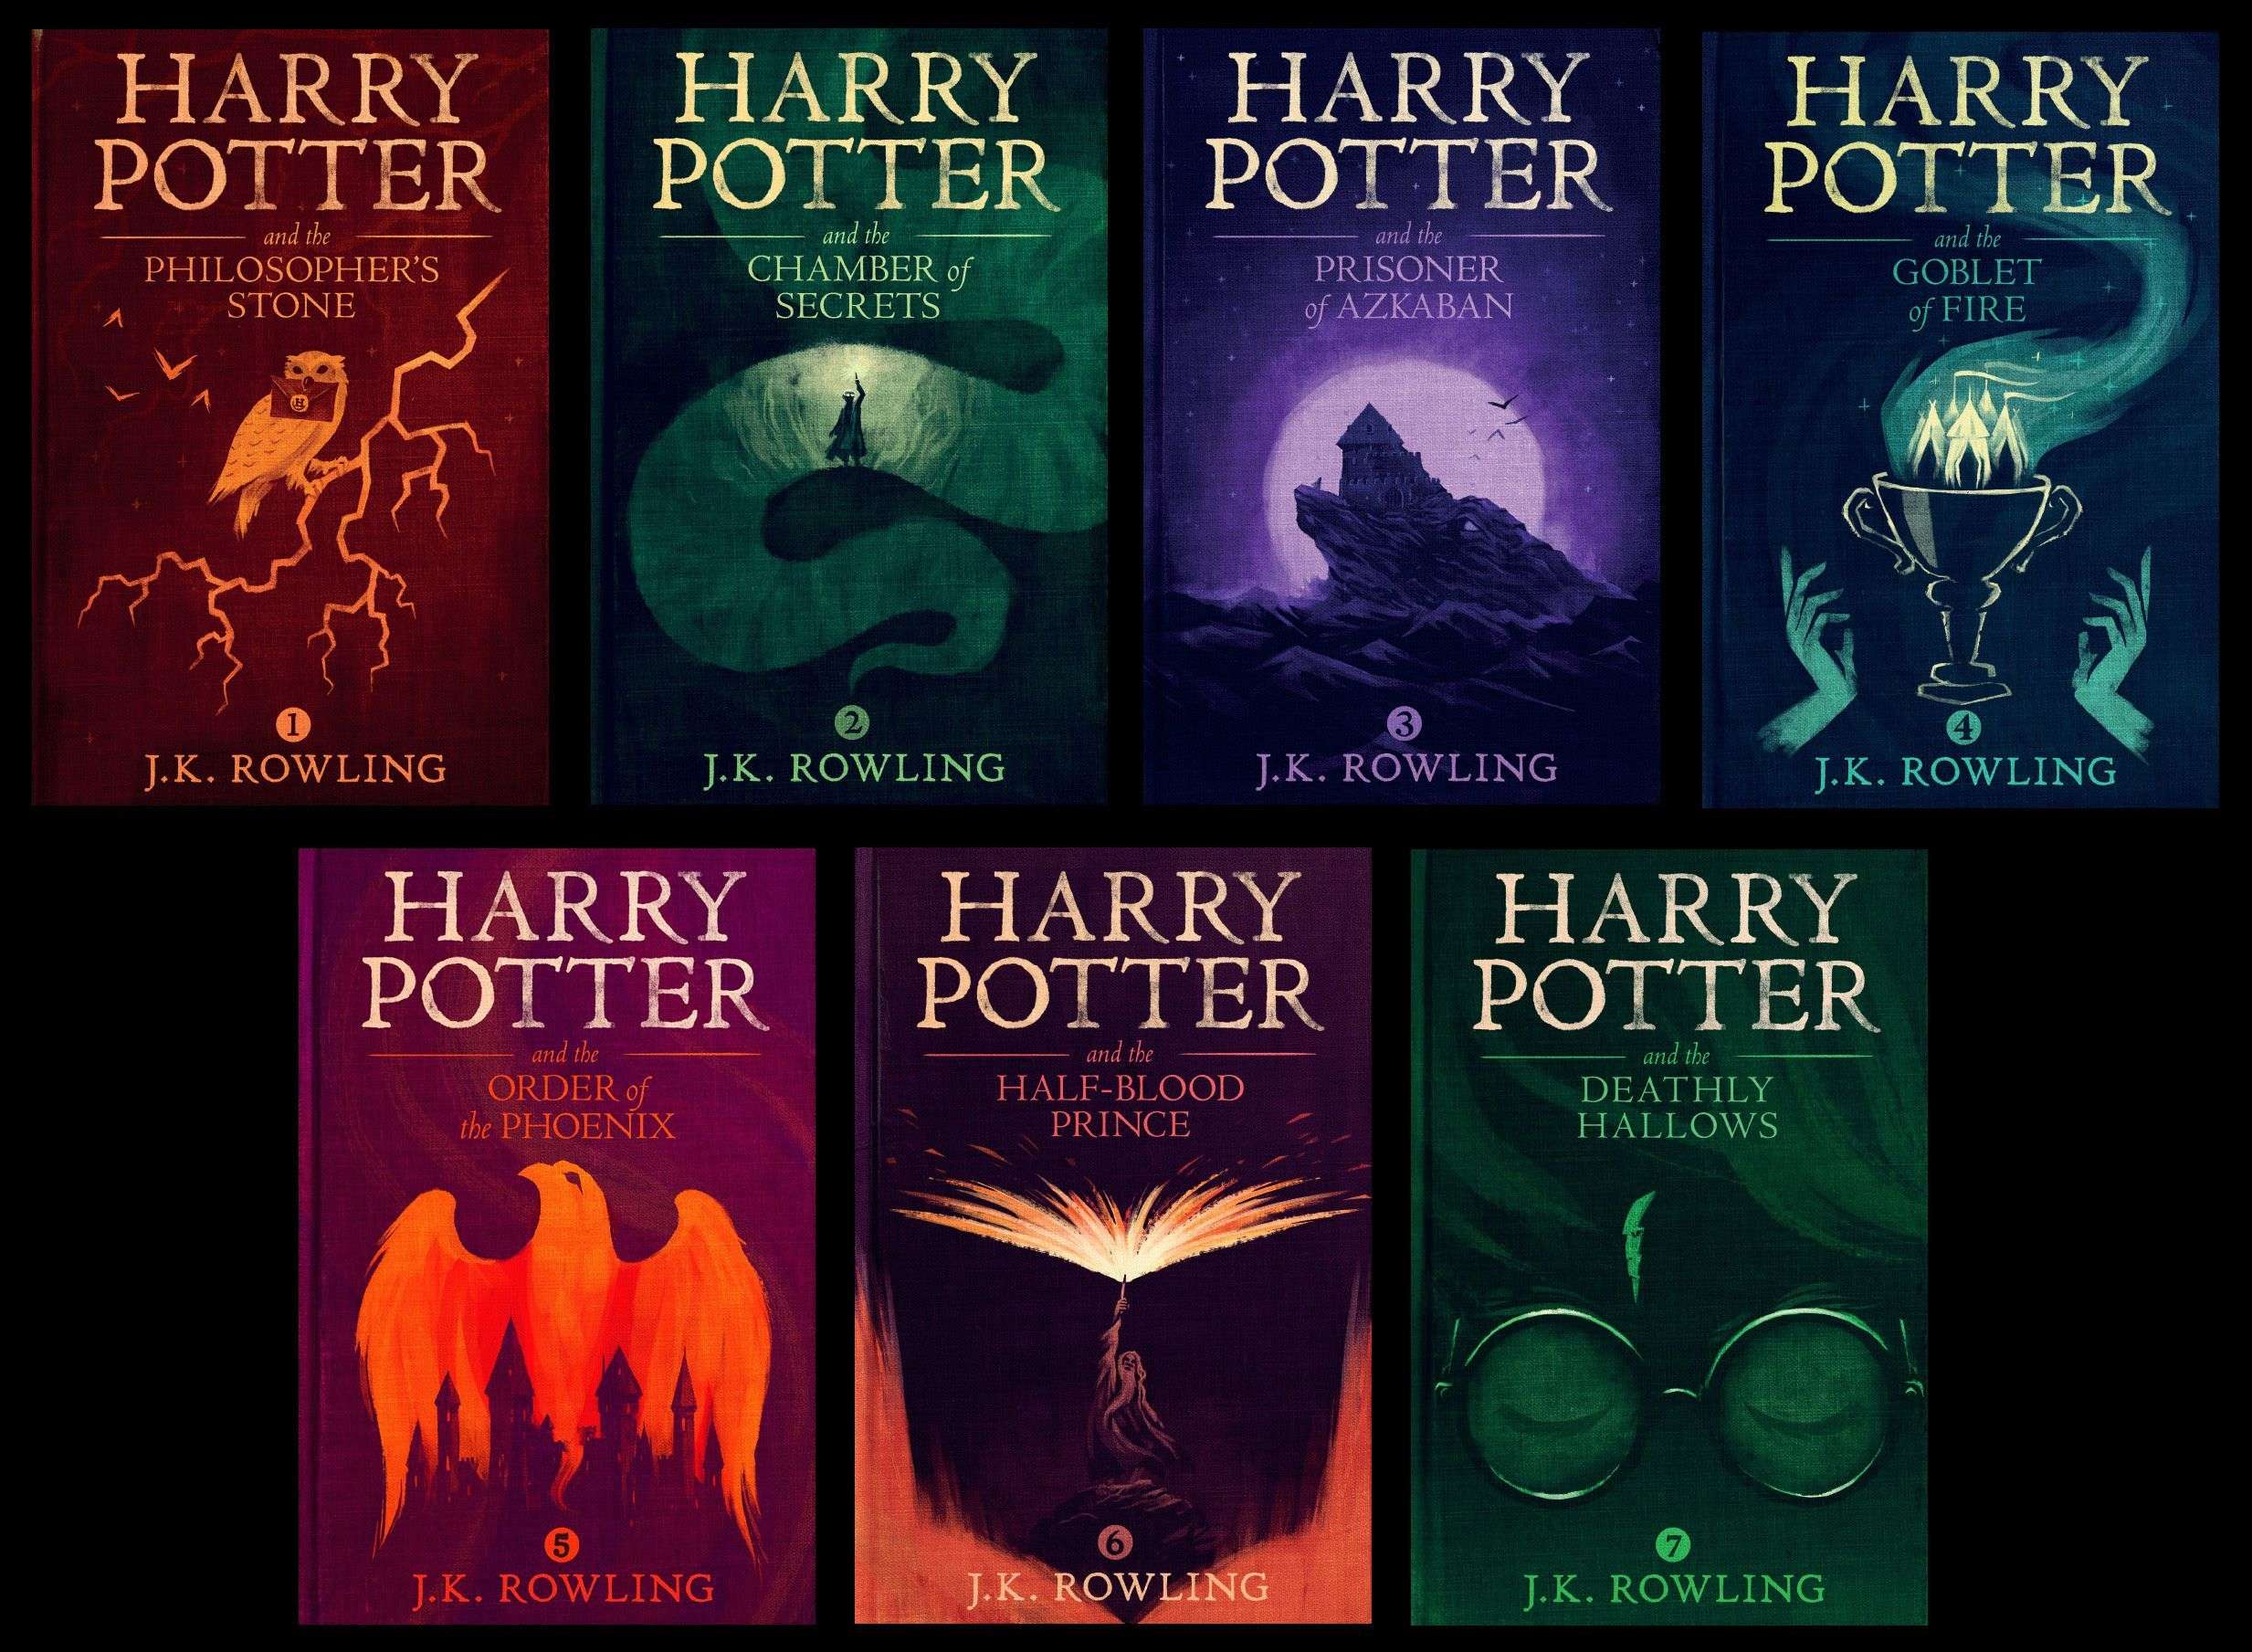 Harry potter audio books release dates